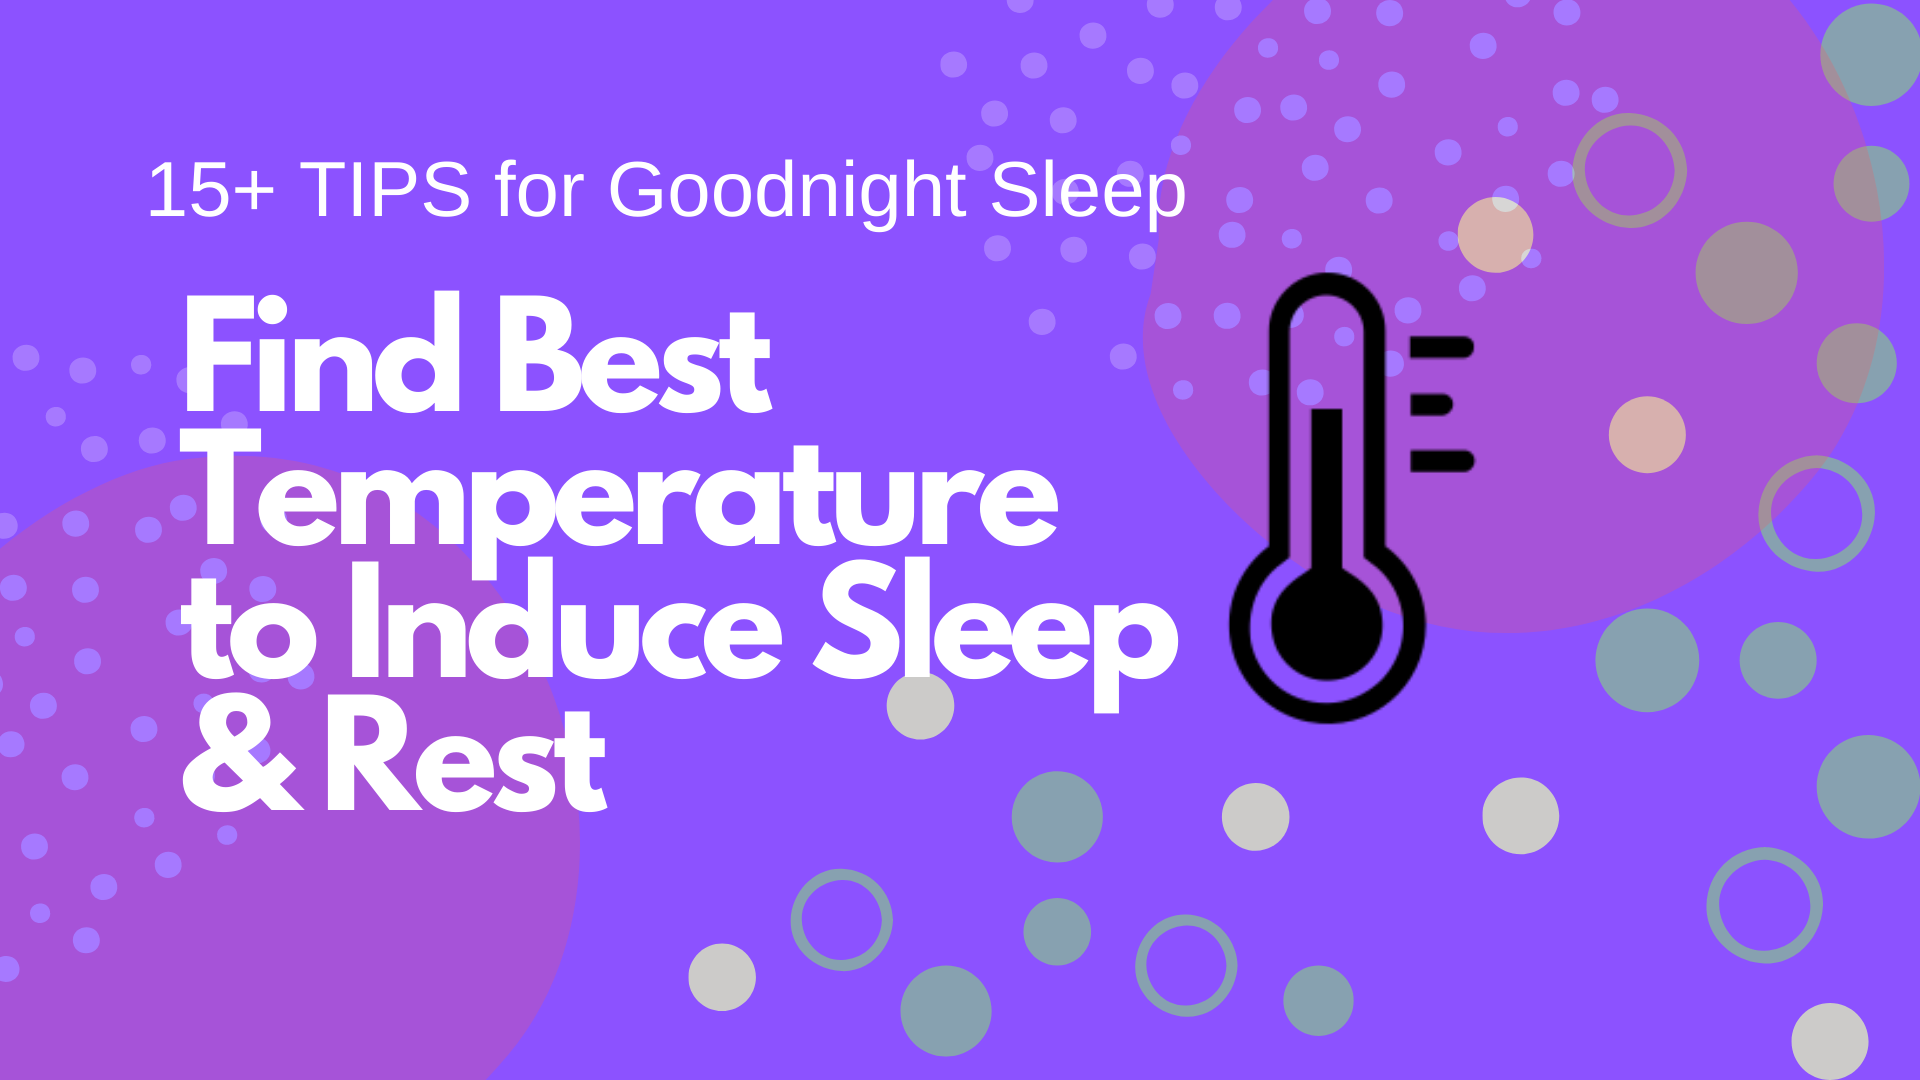 Find Best Temperature to Induce Rest